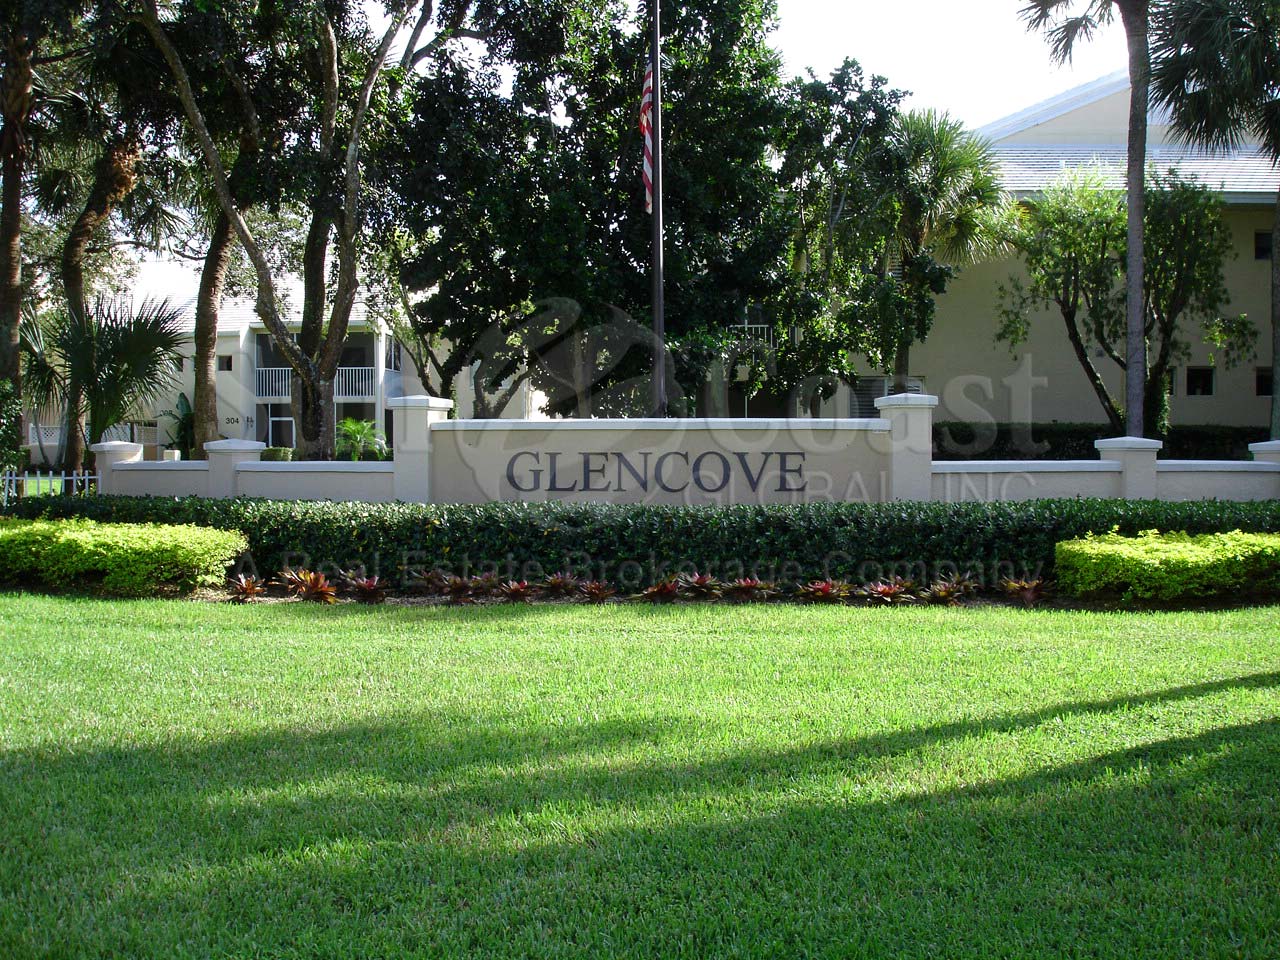 Glencove Signage